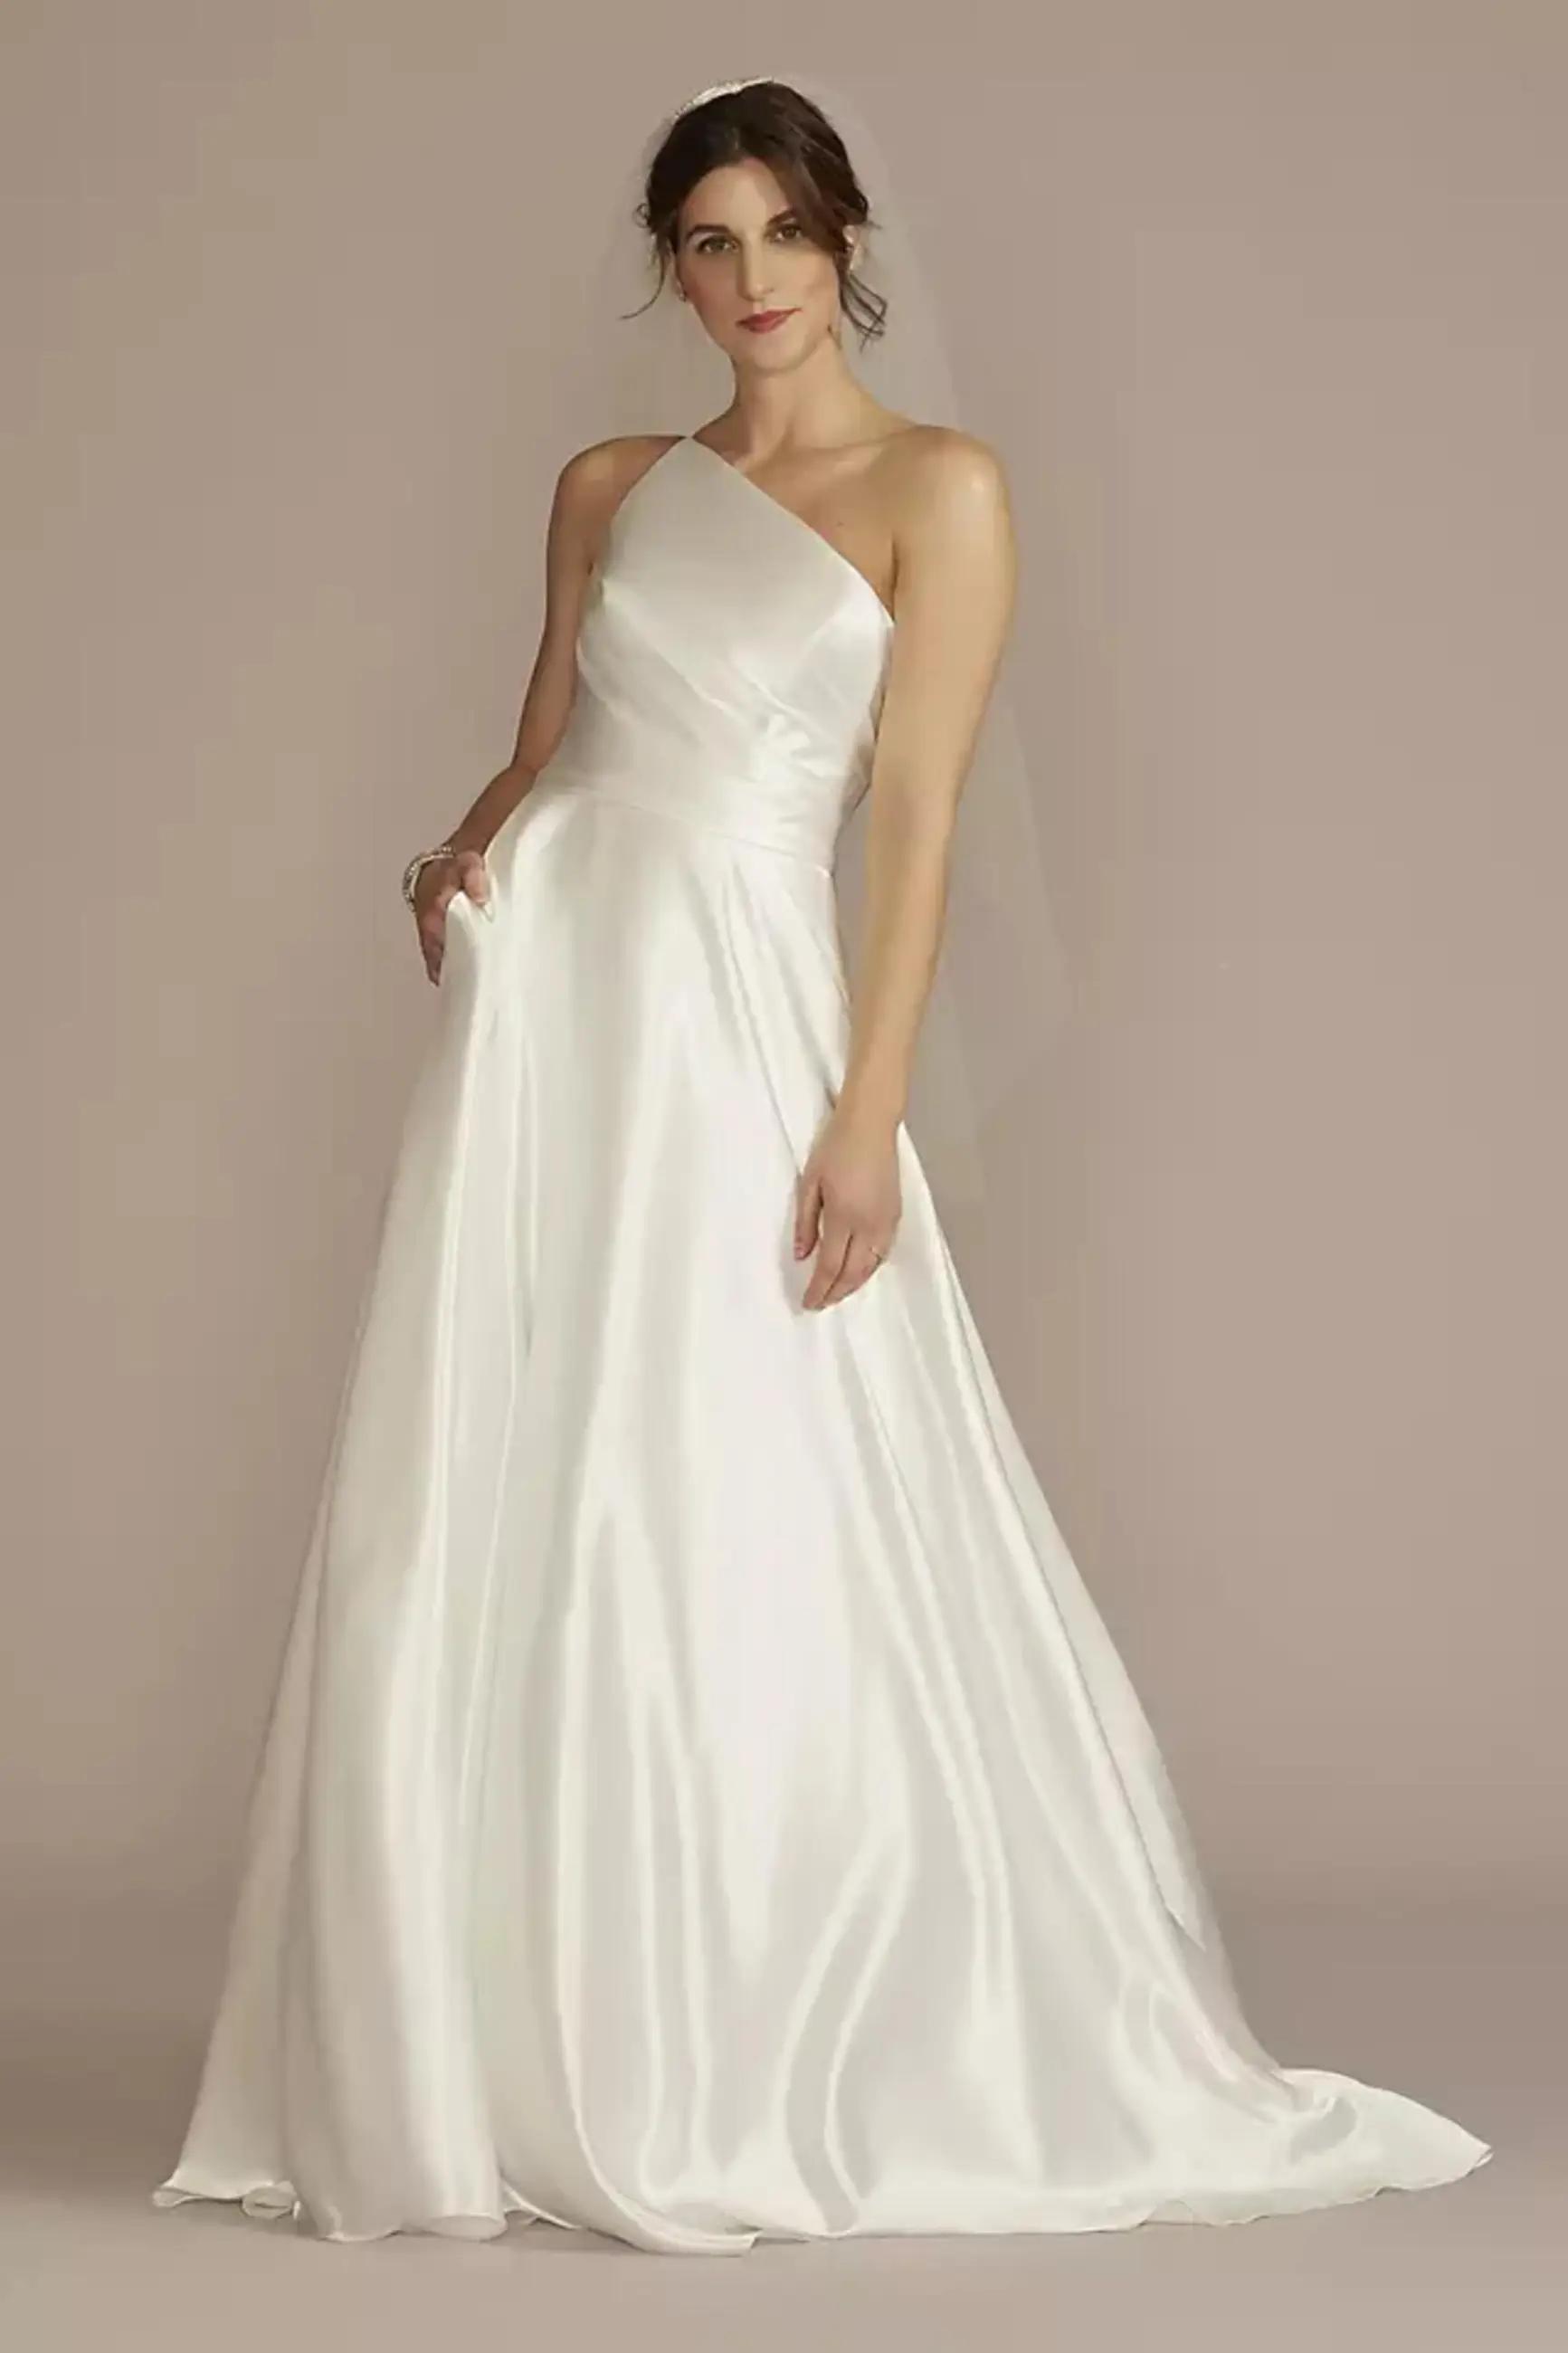 The Beauty of Simplicity: Minimalist Wedding Dresses Image